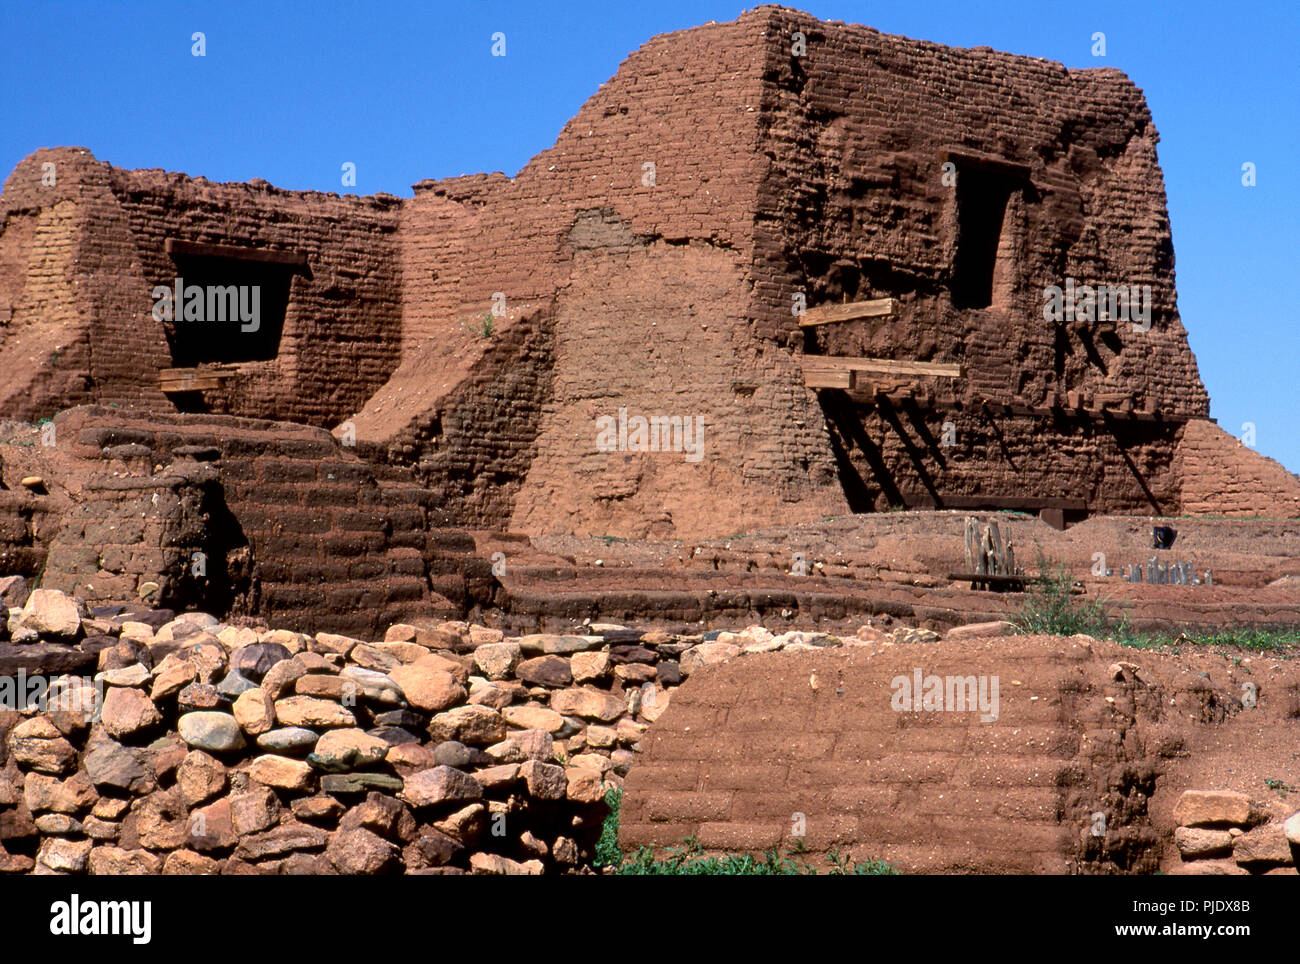 Ruinen von Pecos Mission Church, Pecos Pueblo, New Mexico, Sitz des Pueblo Revolte, 1688. Foto Stockfoto